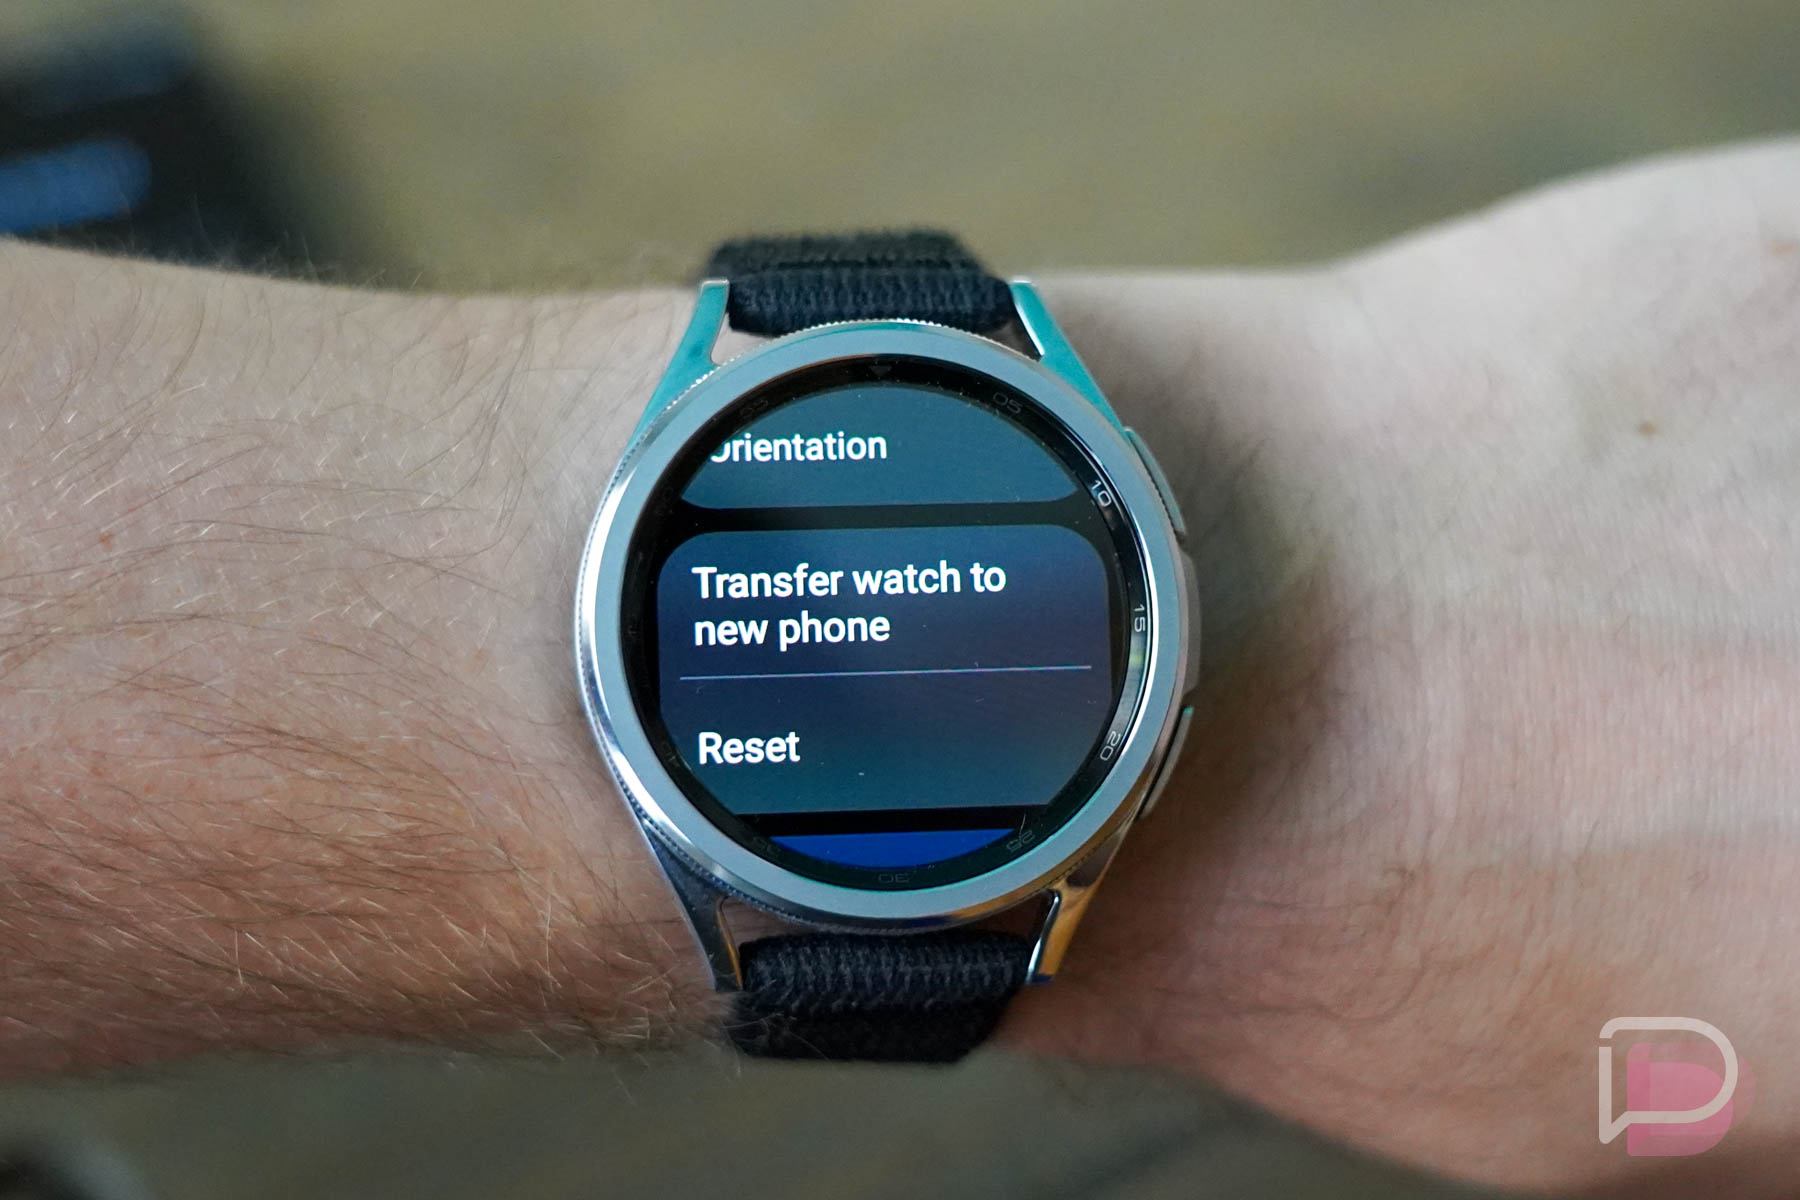 Transfer Galaxy Watch to new phone